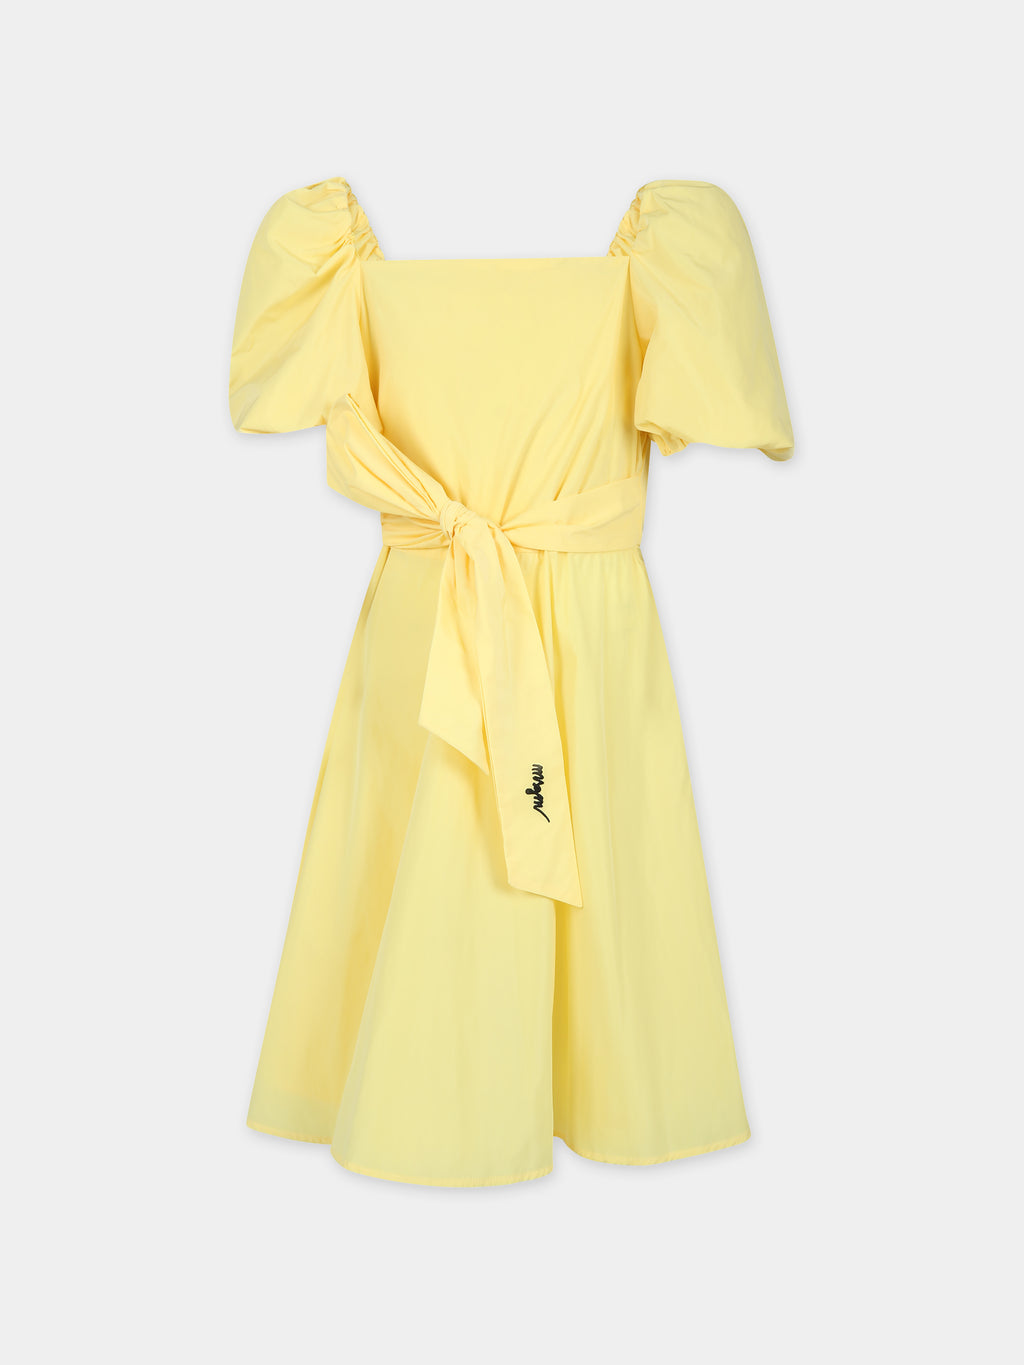 Robe jaune pour fille avec logo